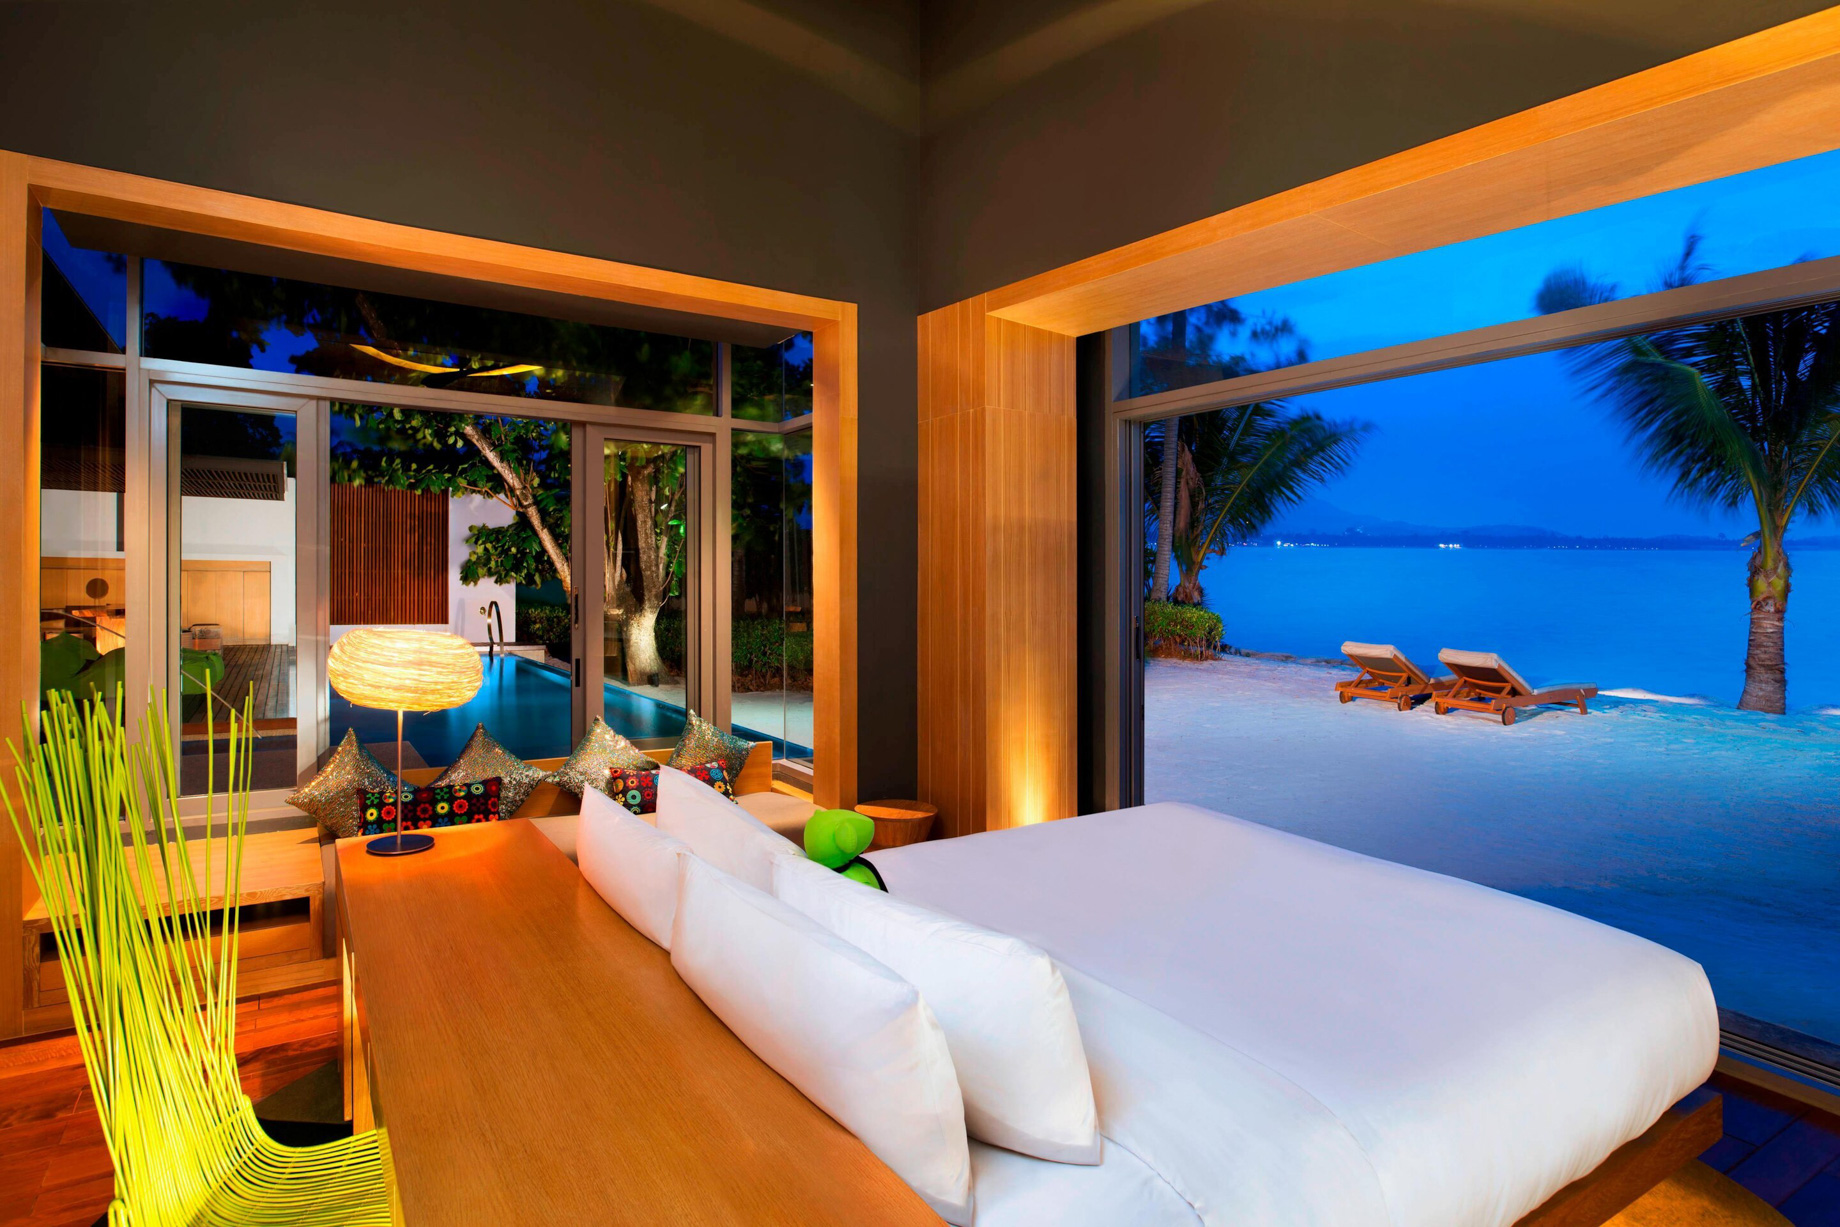 W Koh Samui Resort - Thailand - Wow Ocean Haven Villa Bedroom Beachfront Ocean View at Night